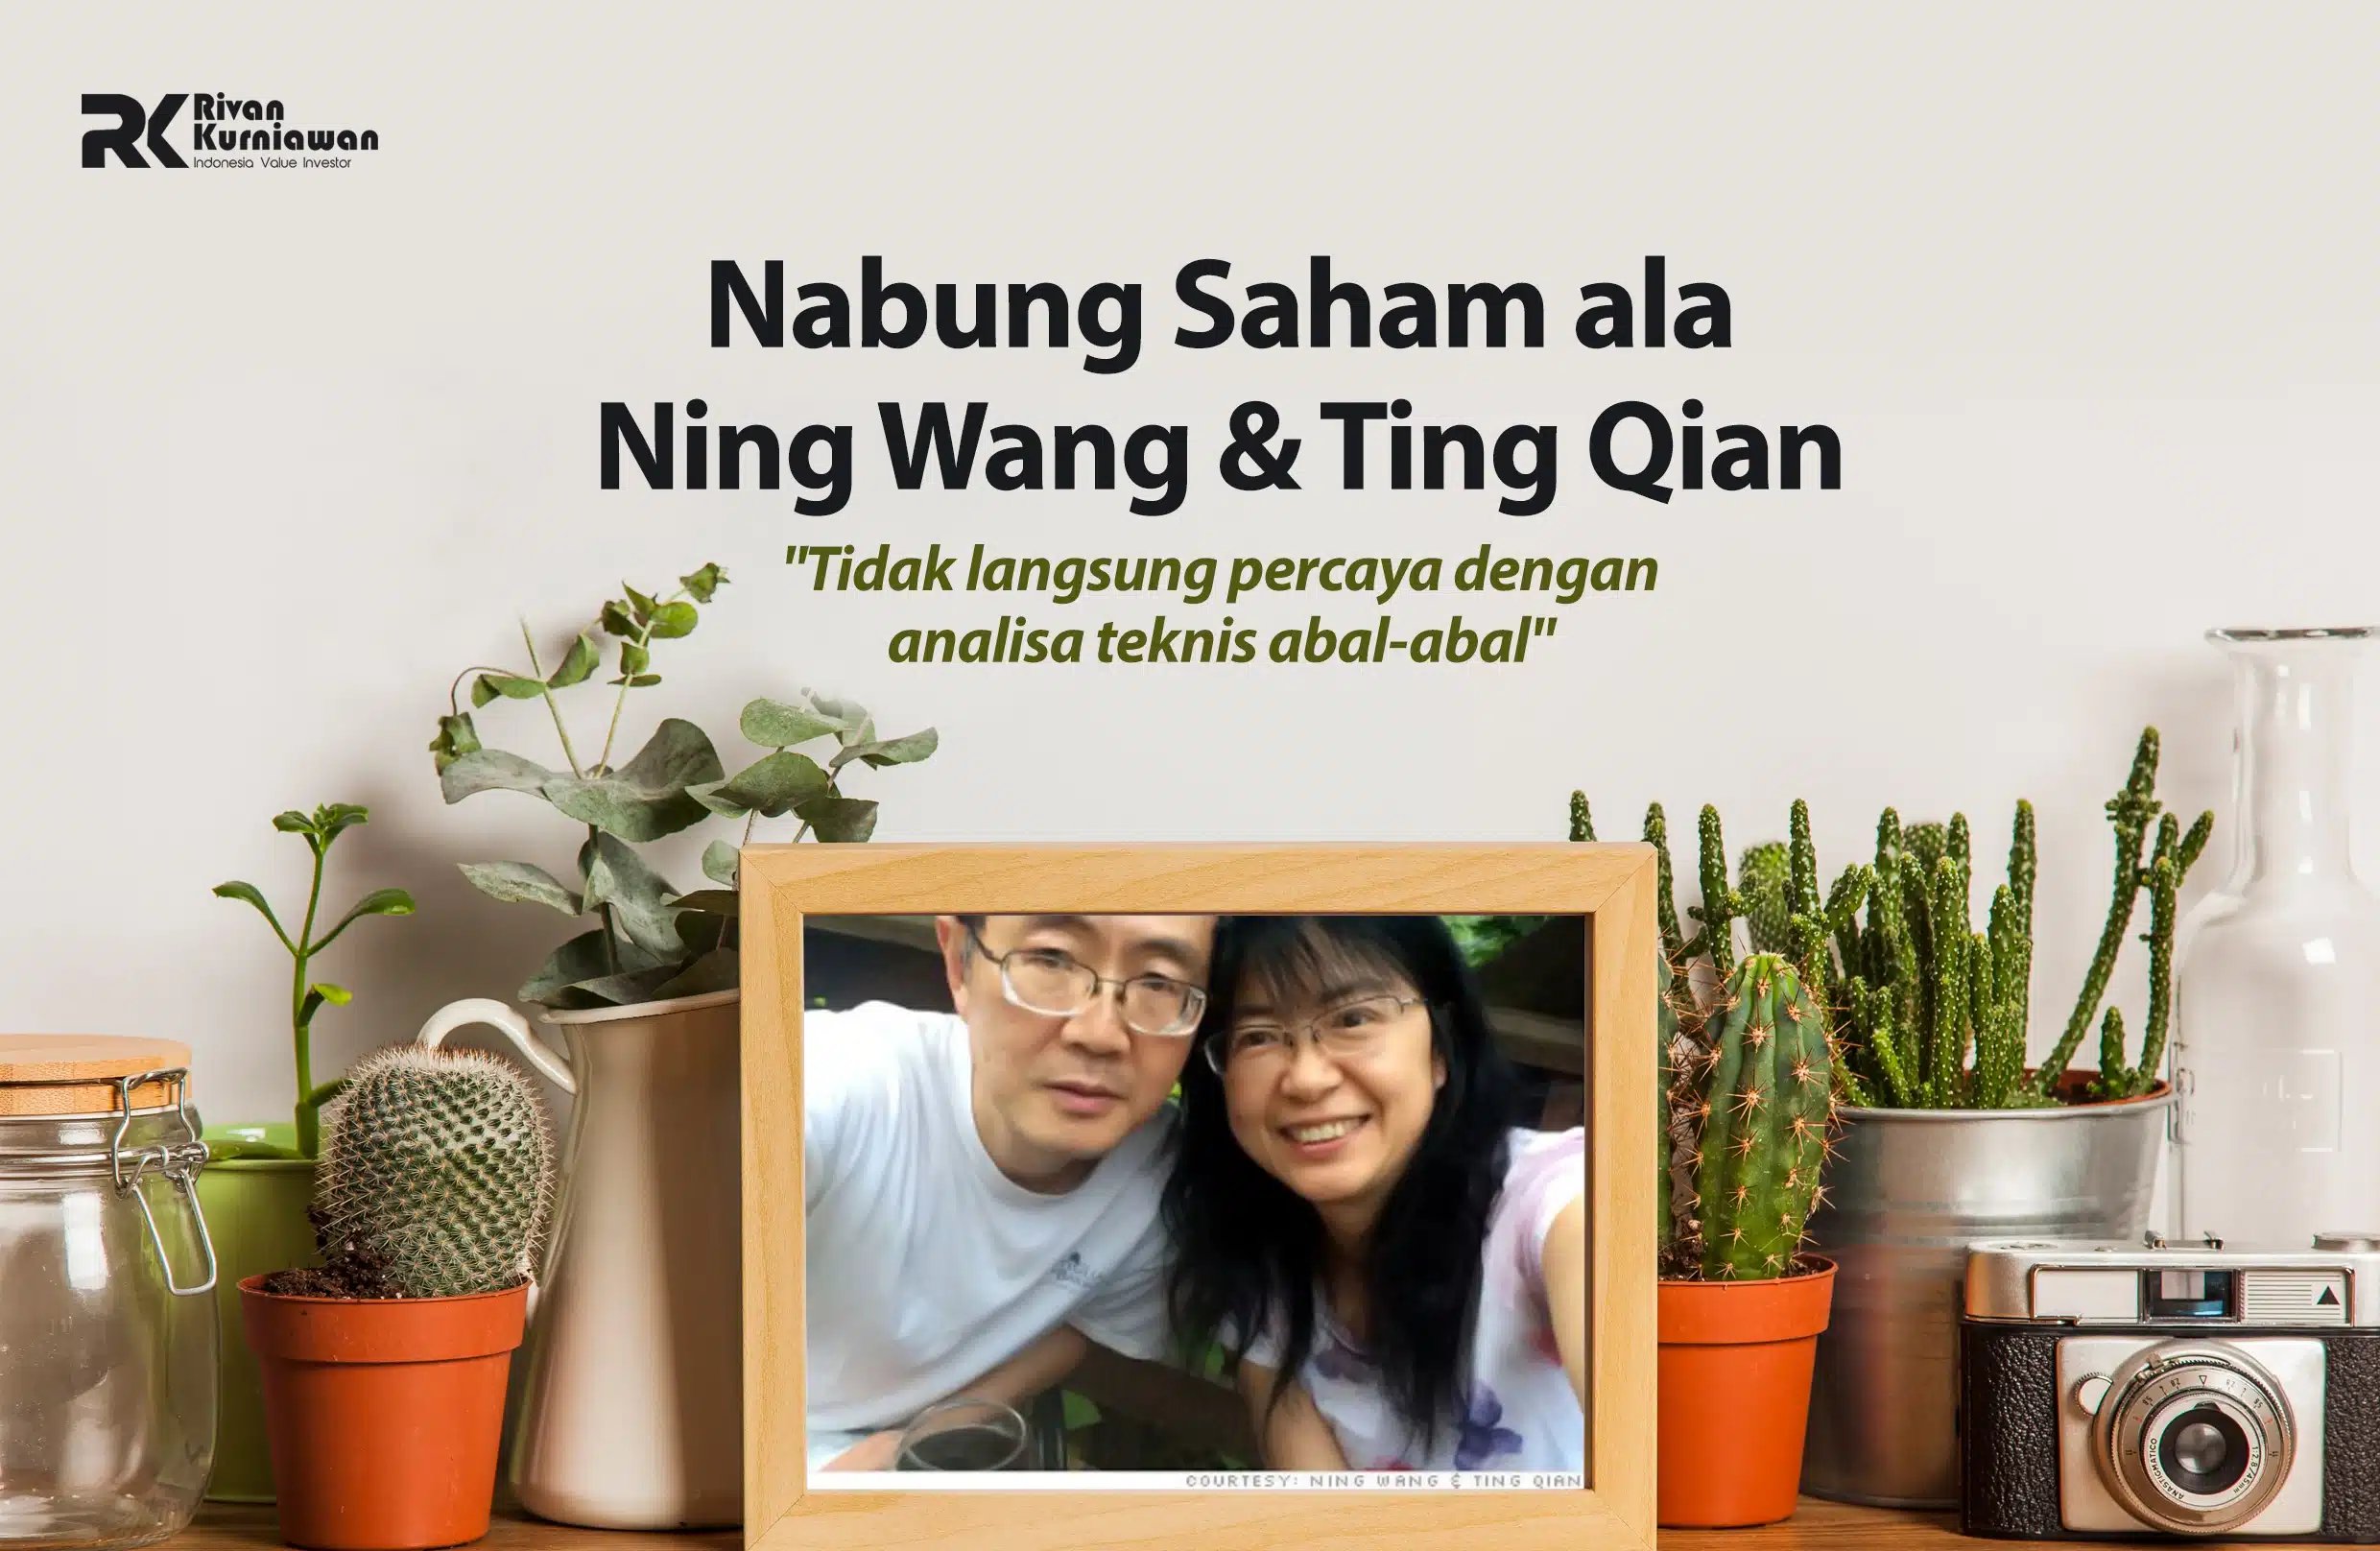 Nabung Saham ala Ning Wang & Ting Qian